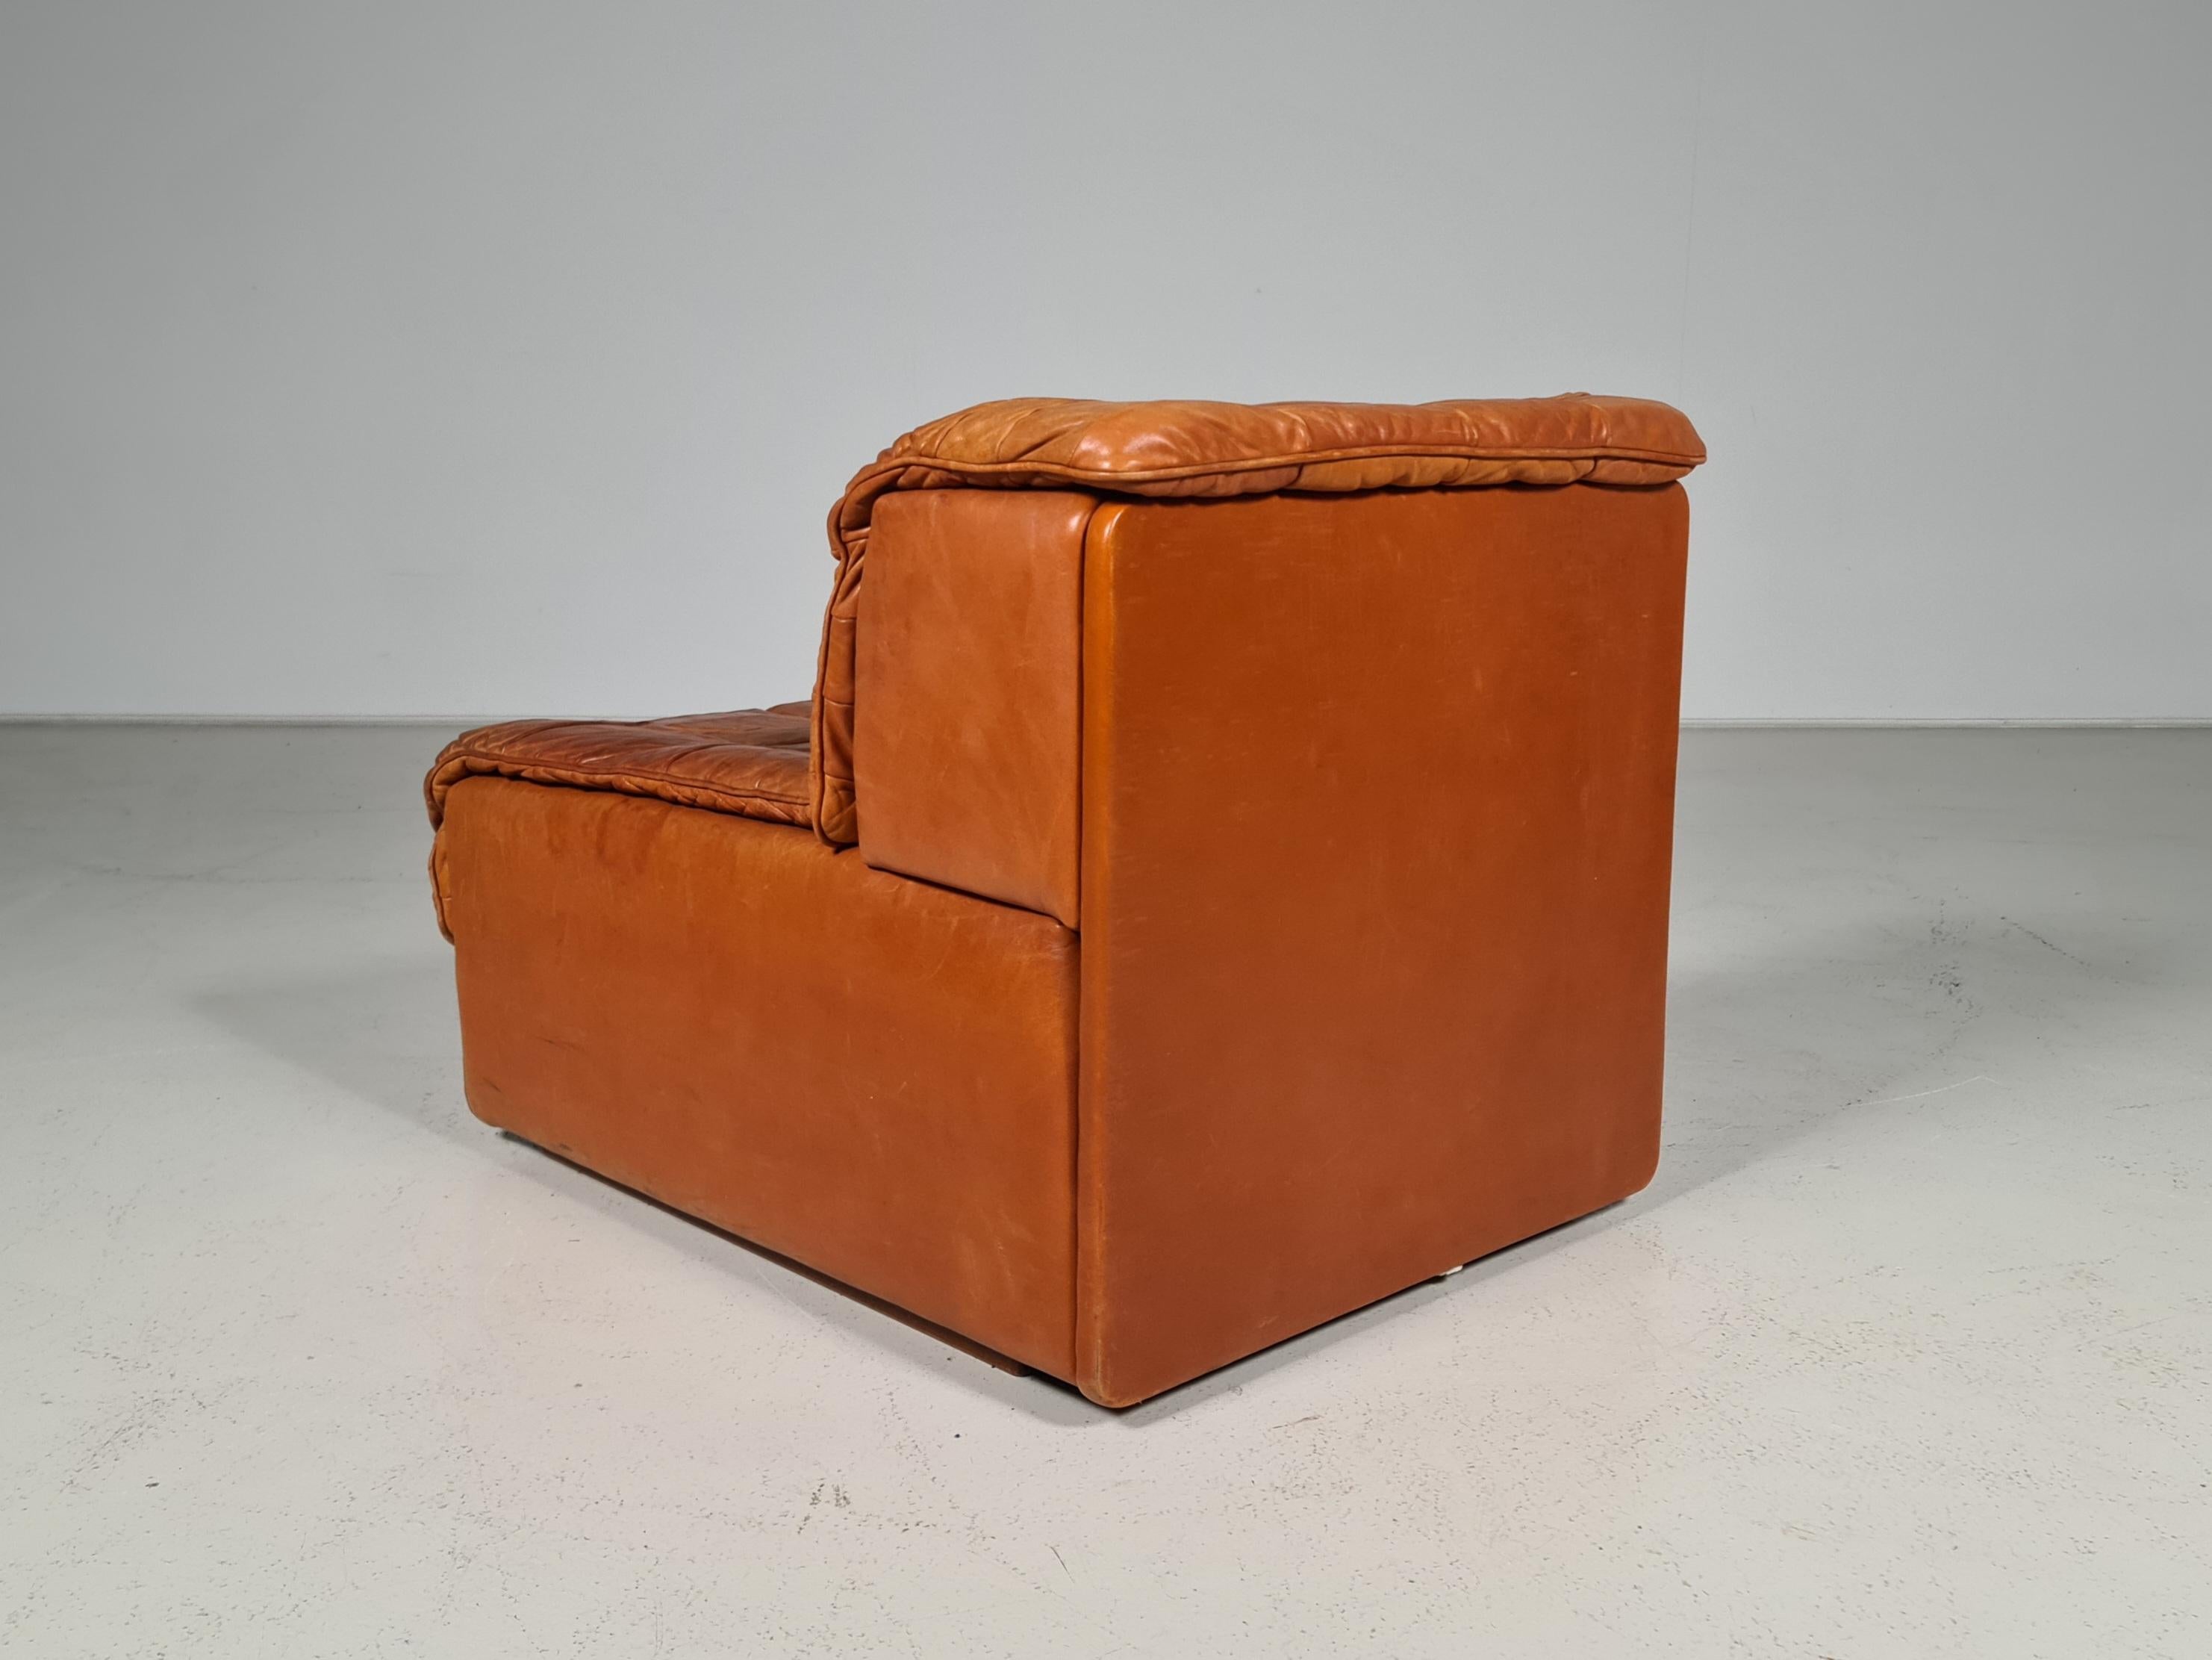 Cognac leather patchwork De Sede DS11 chair, Switzerland, 1970s.  Amazing patina.
 